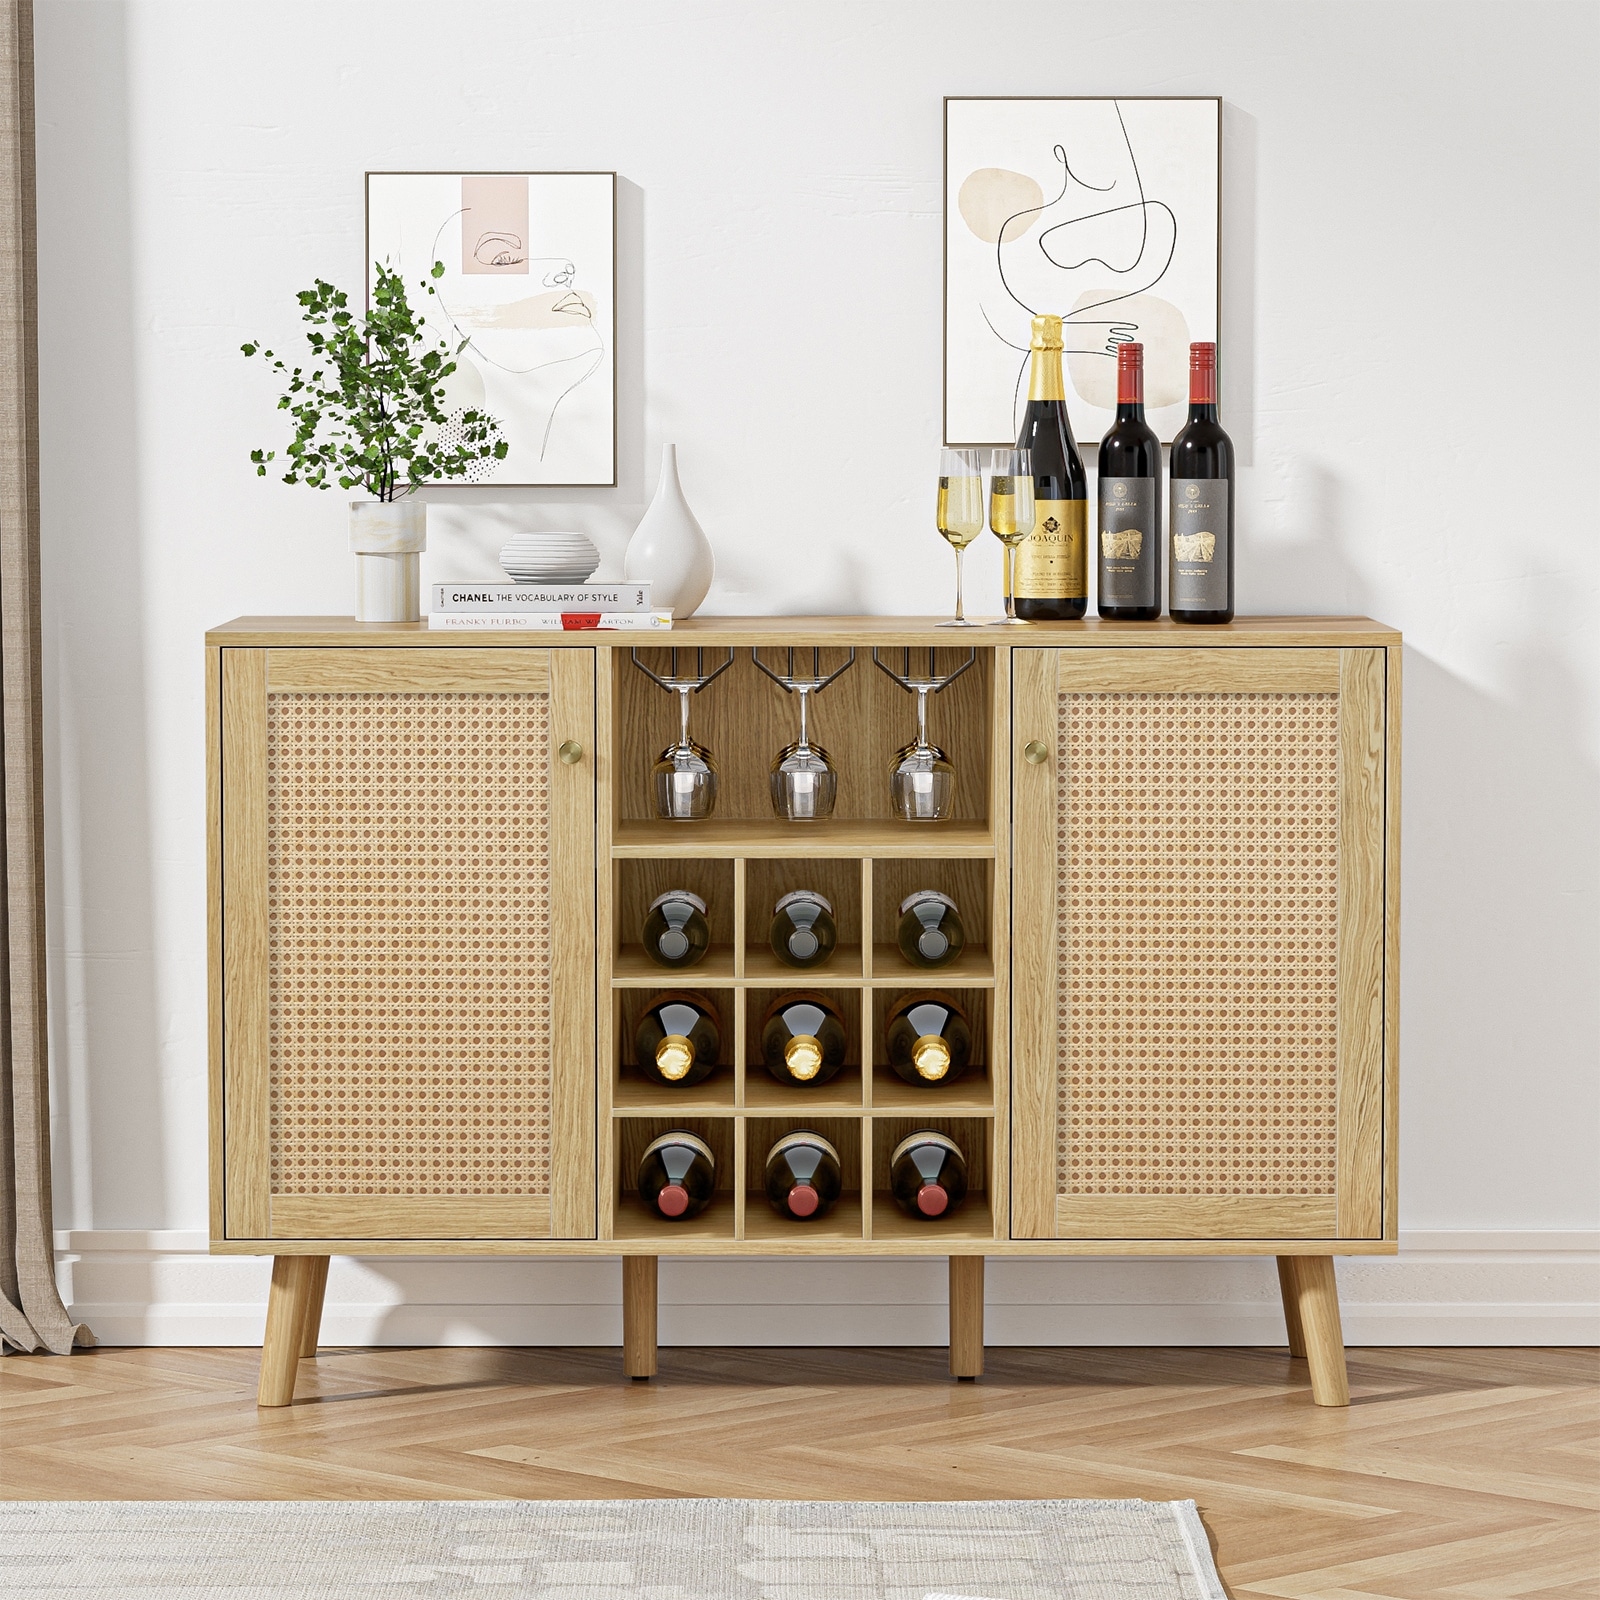 https://ak1.ostkcdn.com/images/products/is/images/direct/b30b8d57f96499145b4adff8bb6ec696cff4c436/Anmytek-Oak-Rattan-Wine-Bar-Cabinet-2-Door-Farmhouse-Liquor-Cabinet-with-Wine-Rack-and-Glass-Holder-Buffet-Sideboard.jpg